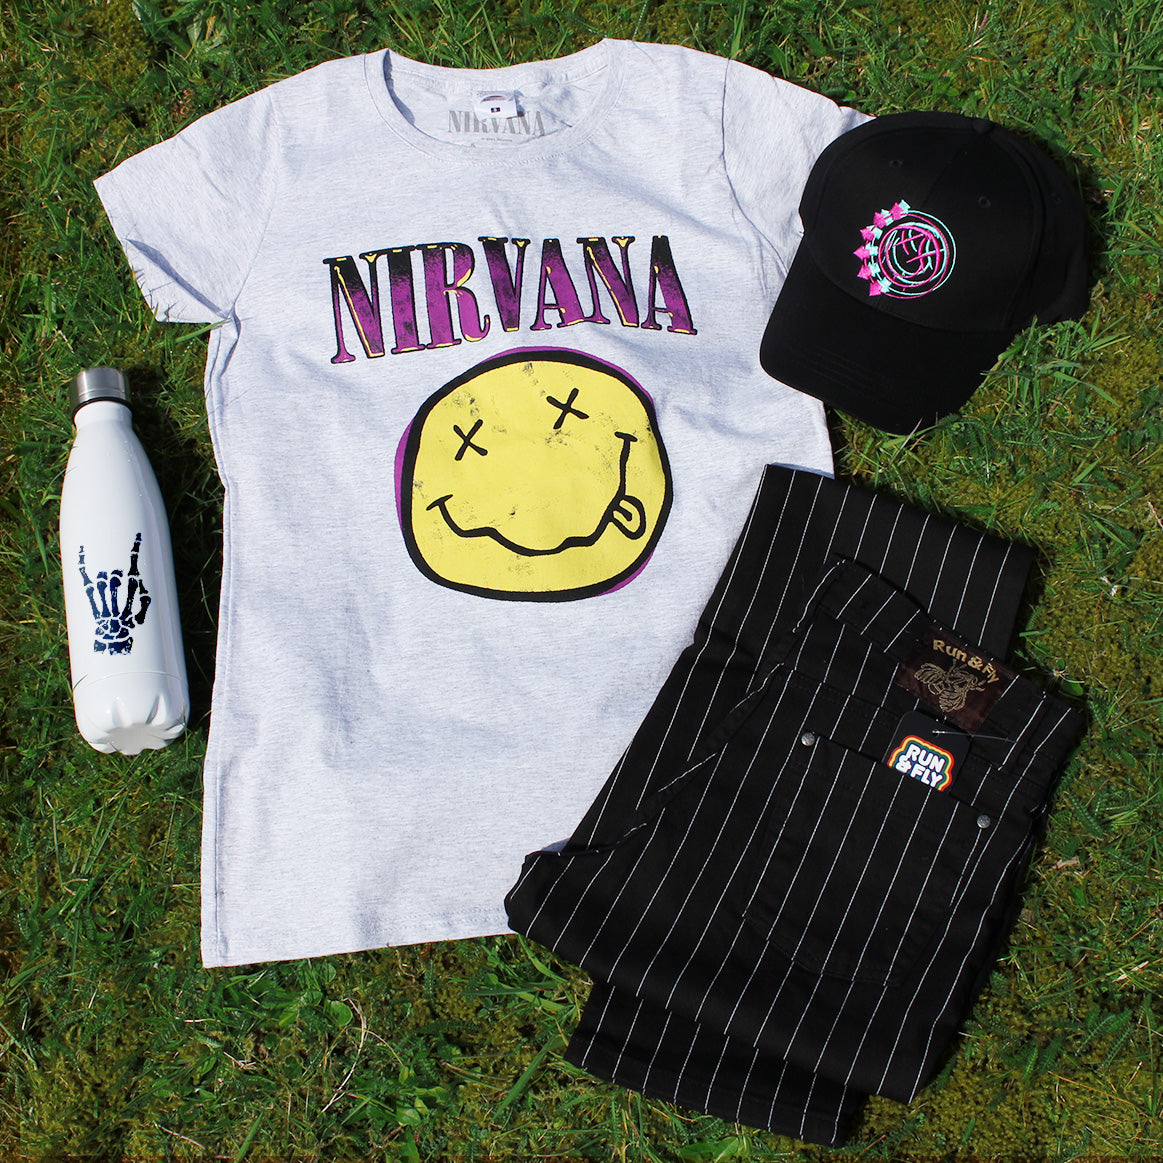 Nirvana Xerox Happy Face Ladies Heather Grey T-Shirt